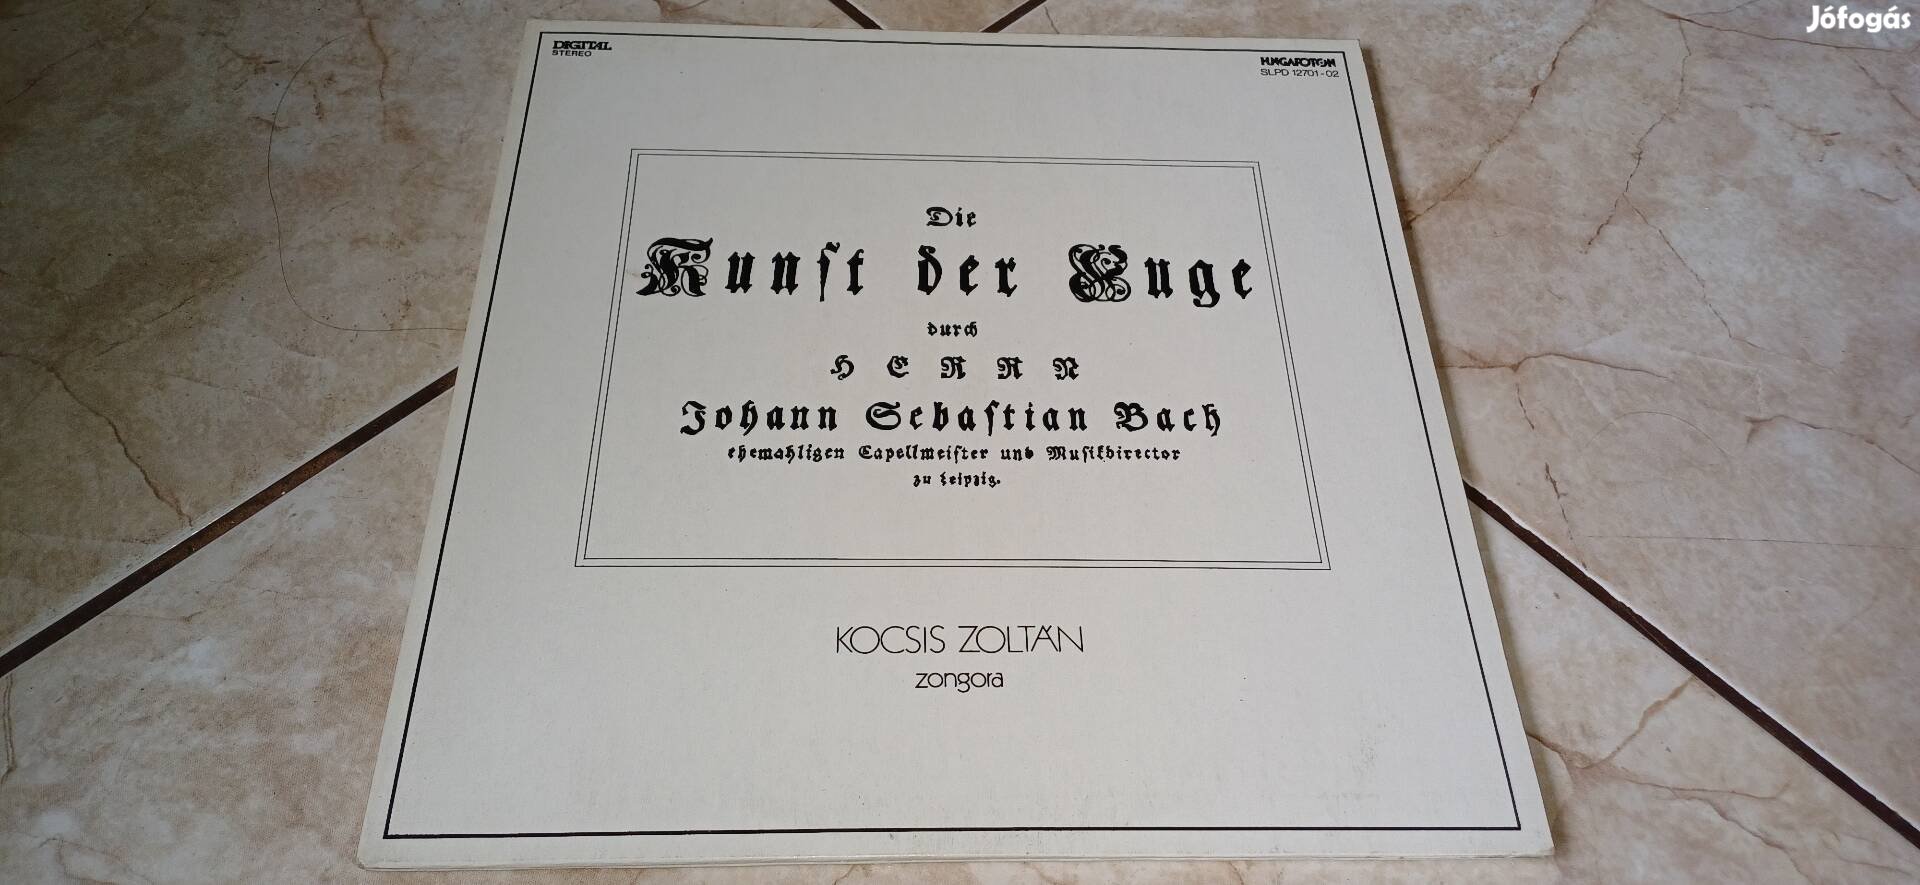 Kocsis Zoltán Bach dupla bakelit lemez